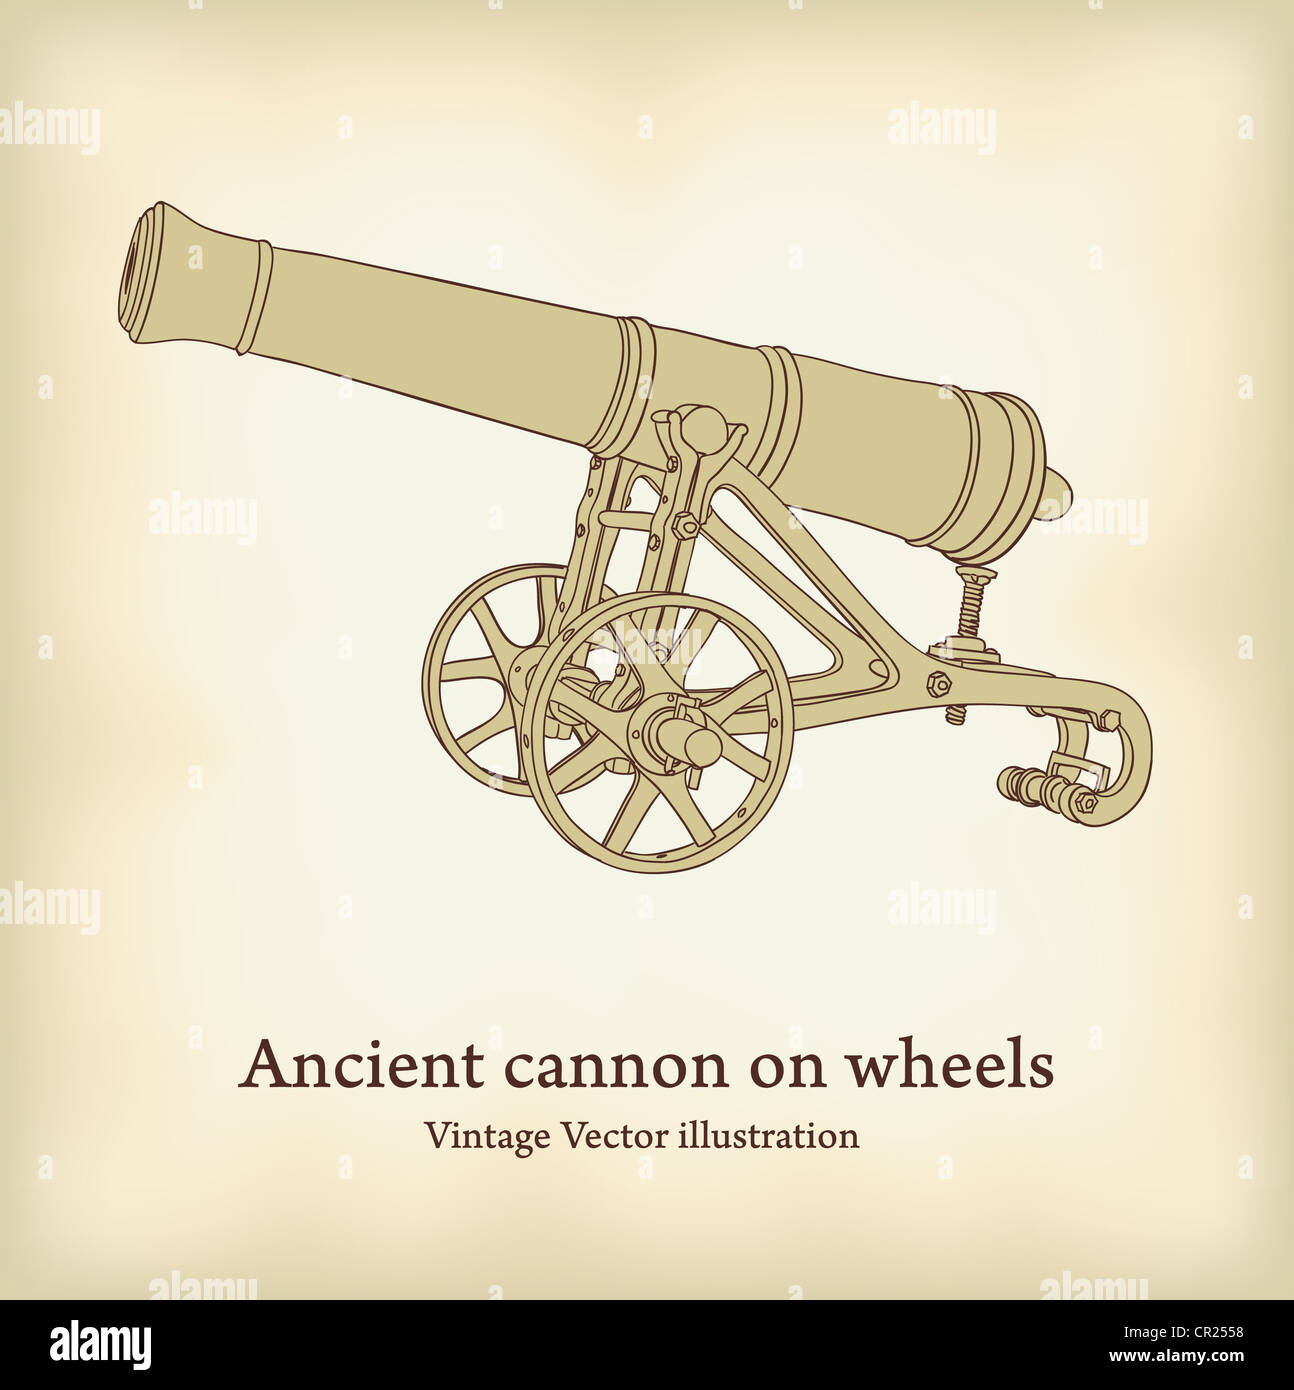 Antique cannon on wheels. Vintage Vector illustration. Stock Photo